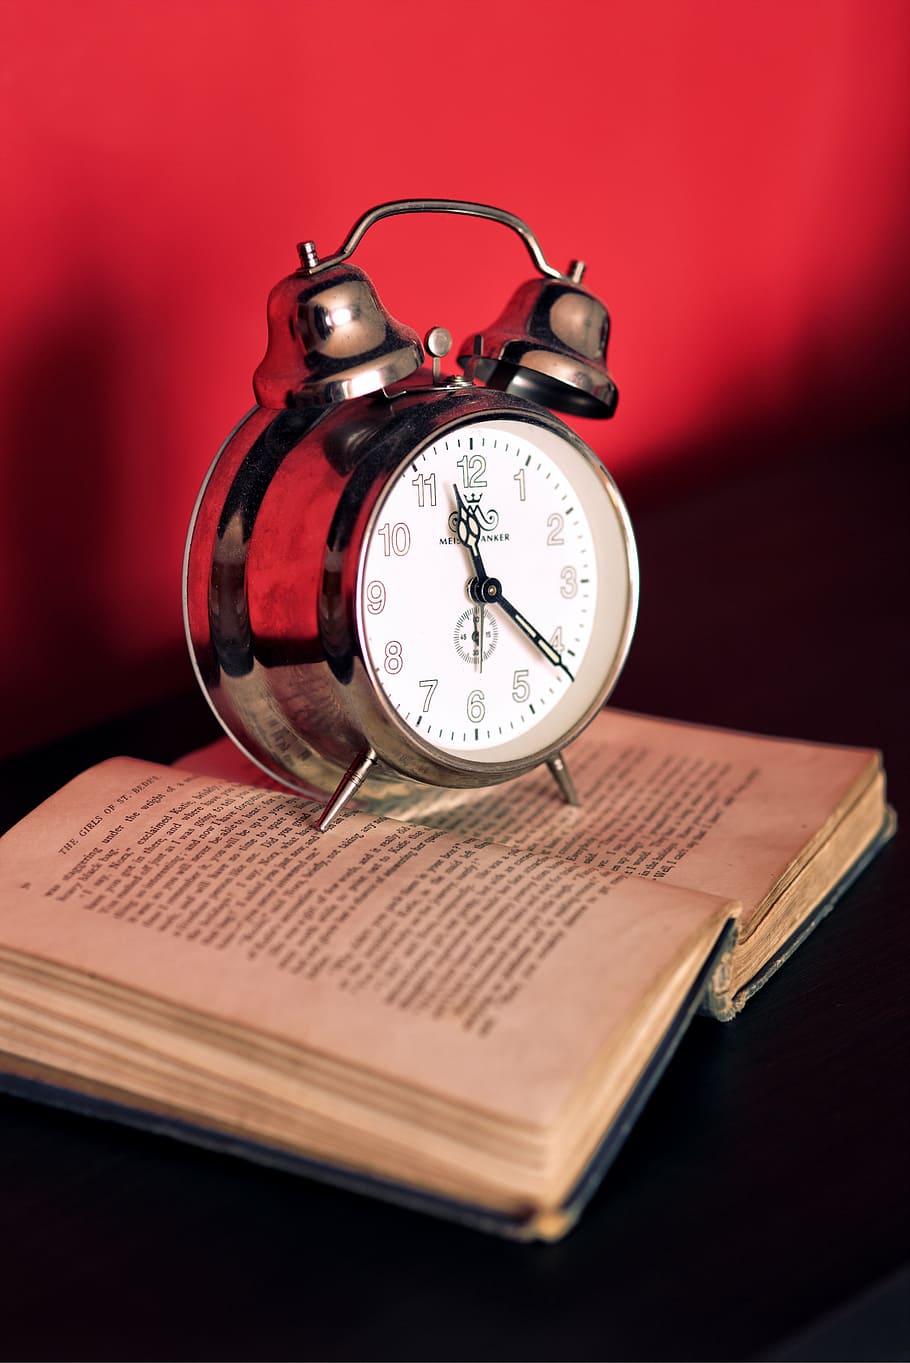 jam, buku, tua, model tahun, waktu, alarm, publikasi, jam alarm, di dalam ruangan, masih hidup